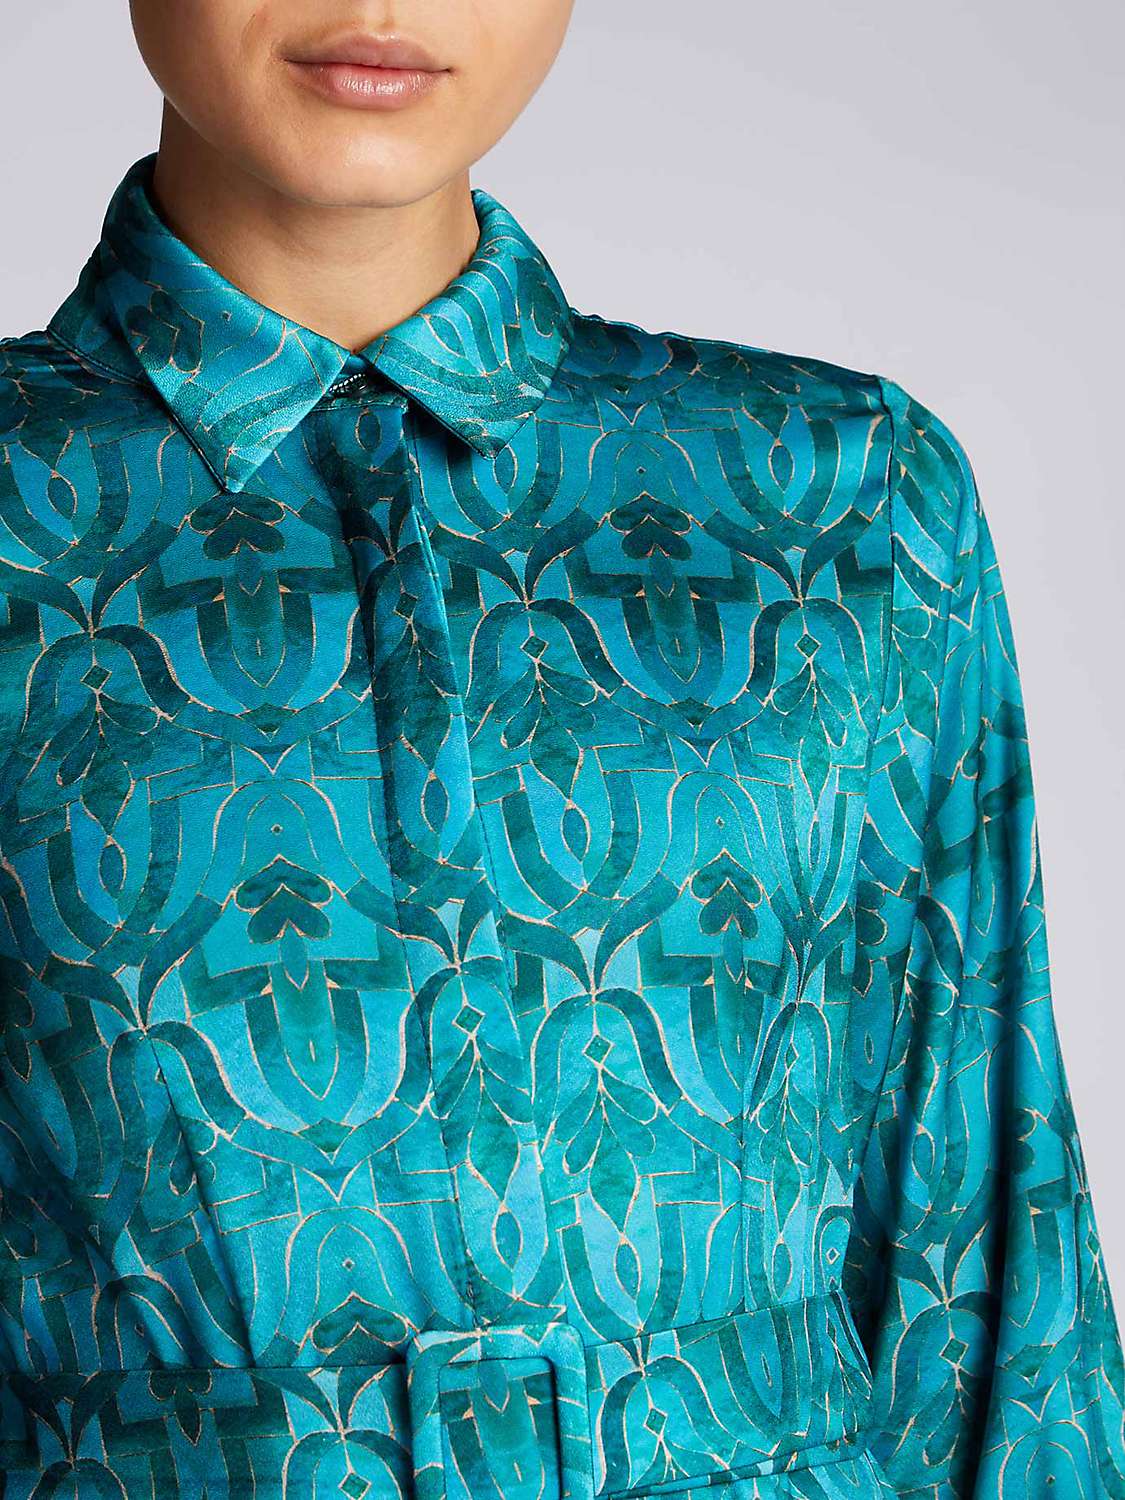 Buy Aab Emerald Geometric Maxi Dress, Teal Online at johnlewis.com